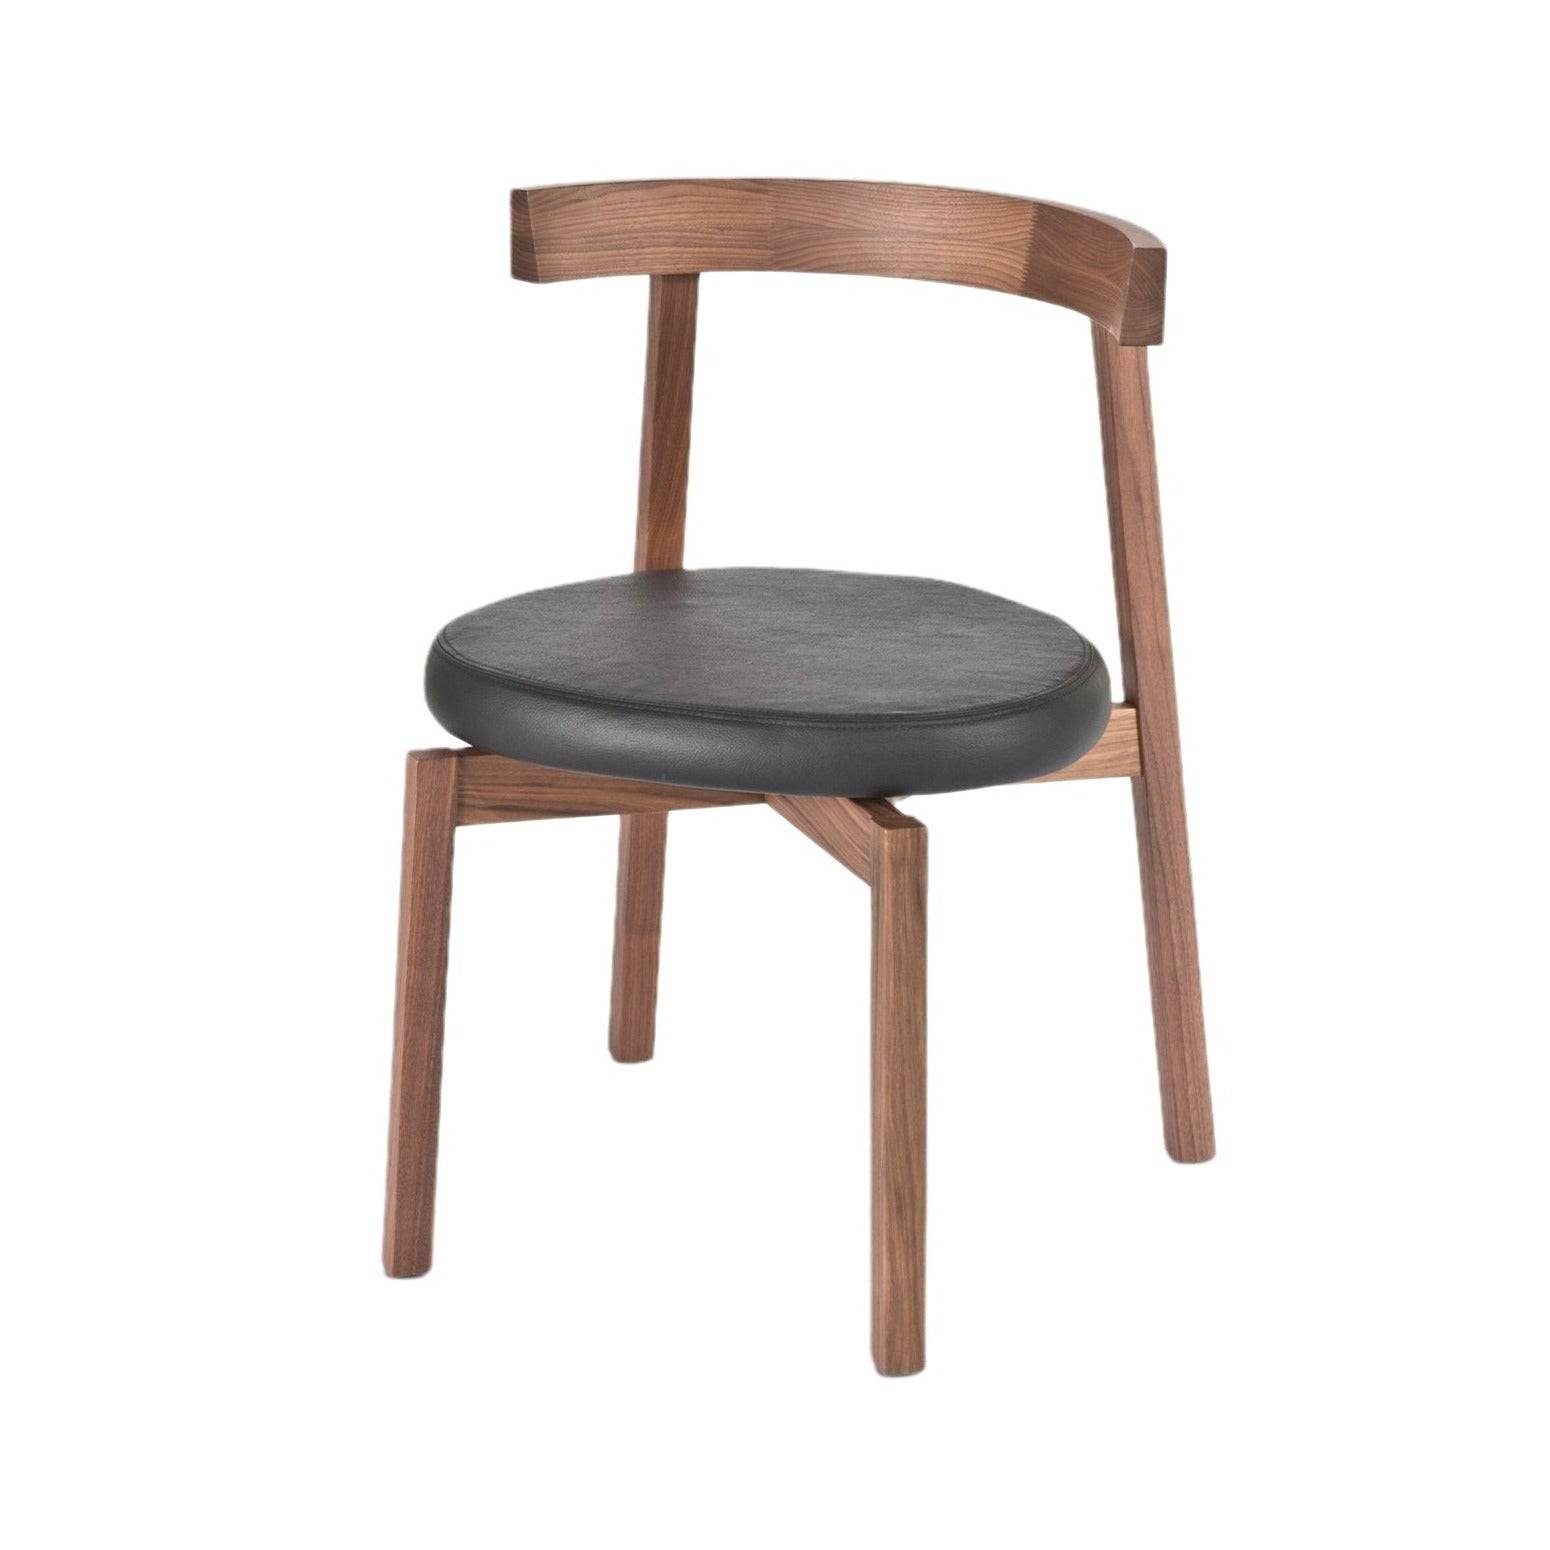 Oki-Nami Chair - THAT COOL LIVING